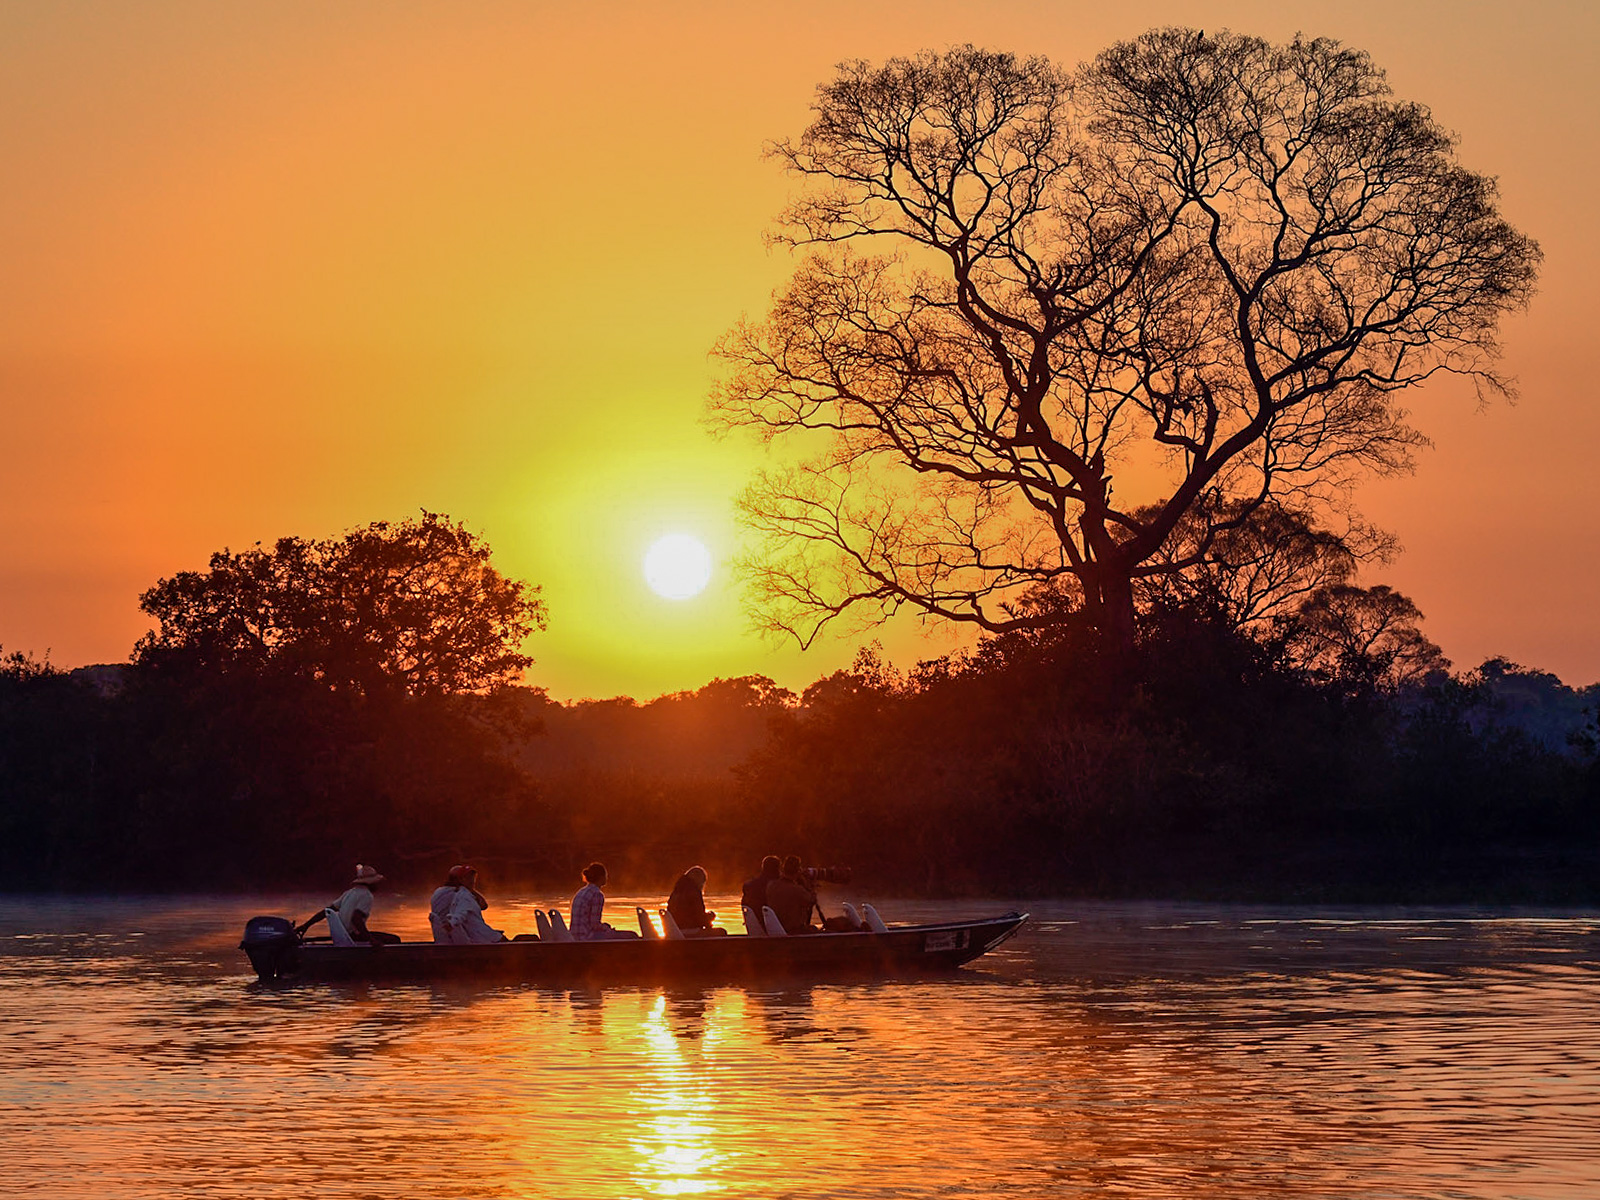 Rio Claro sunset during a boat safari